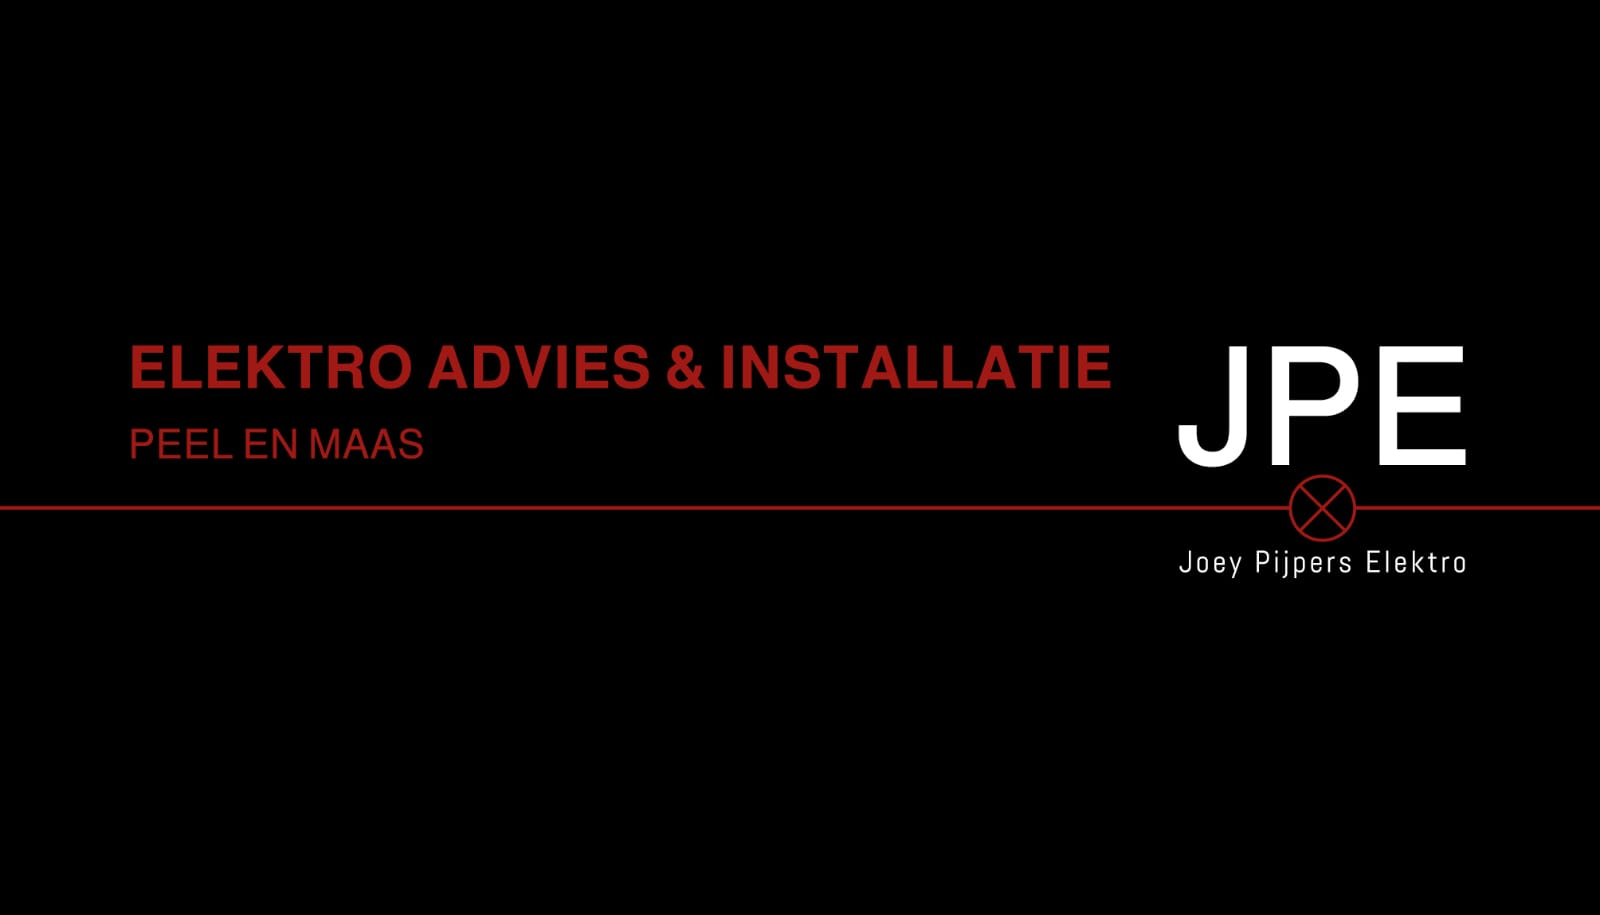 JPE Electro advies & Installatie